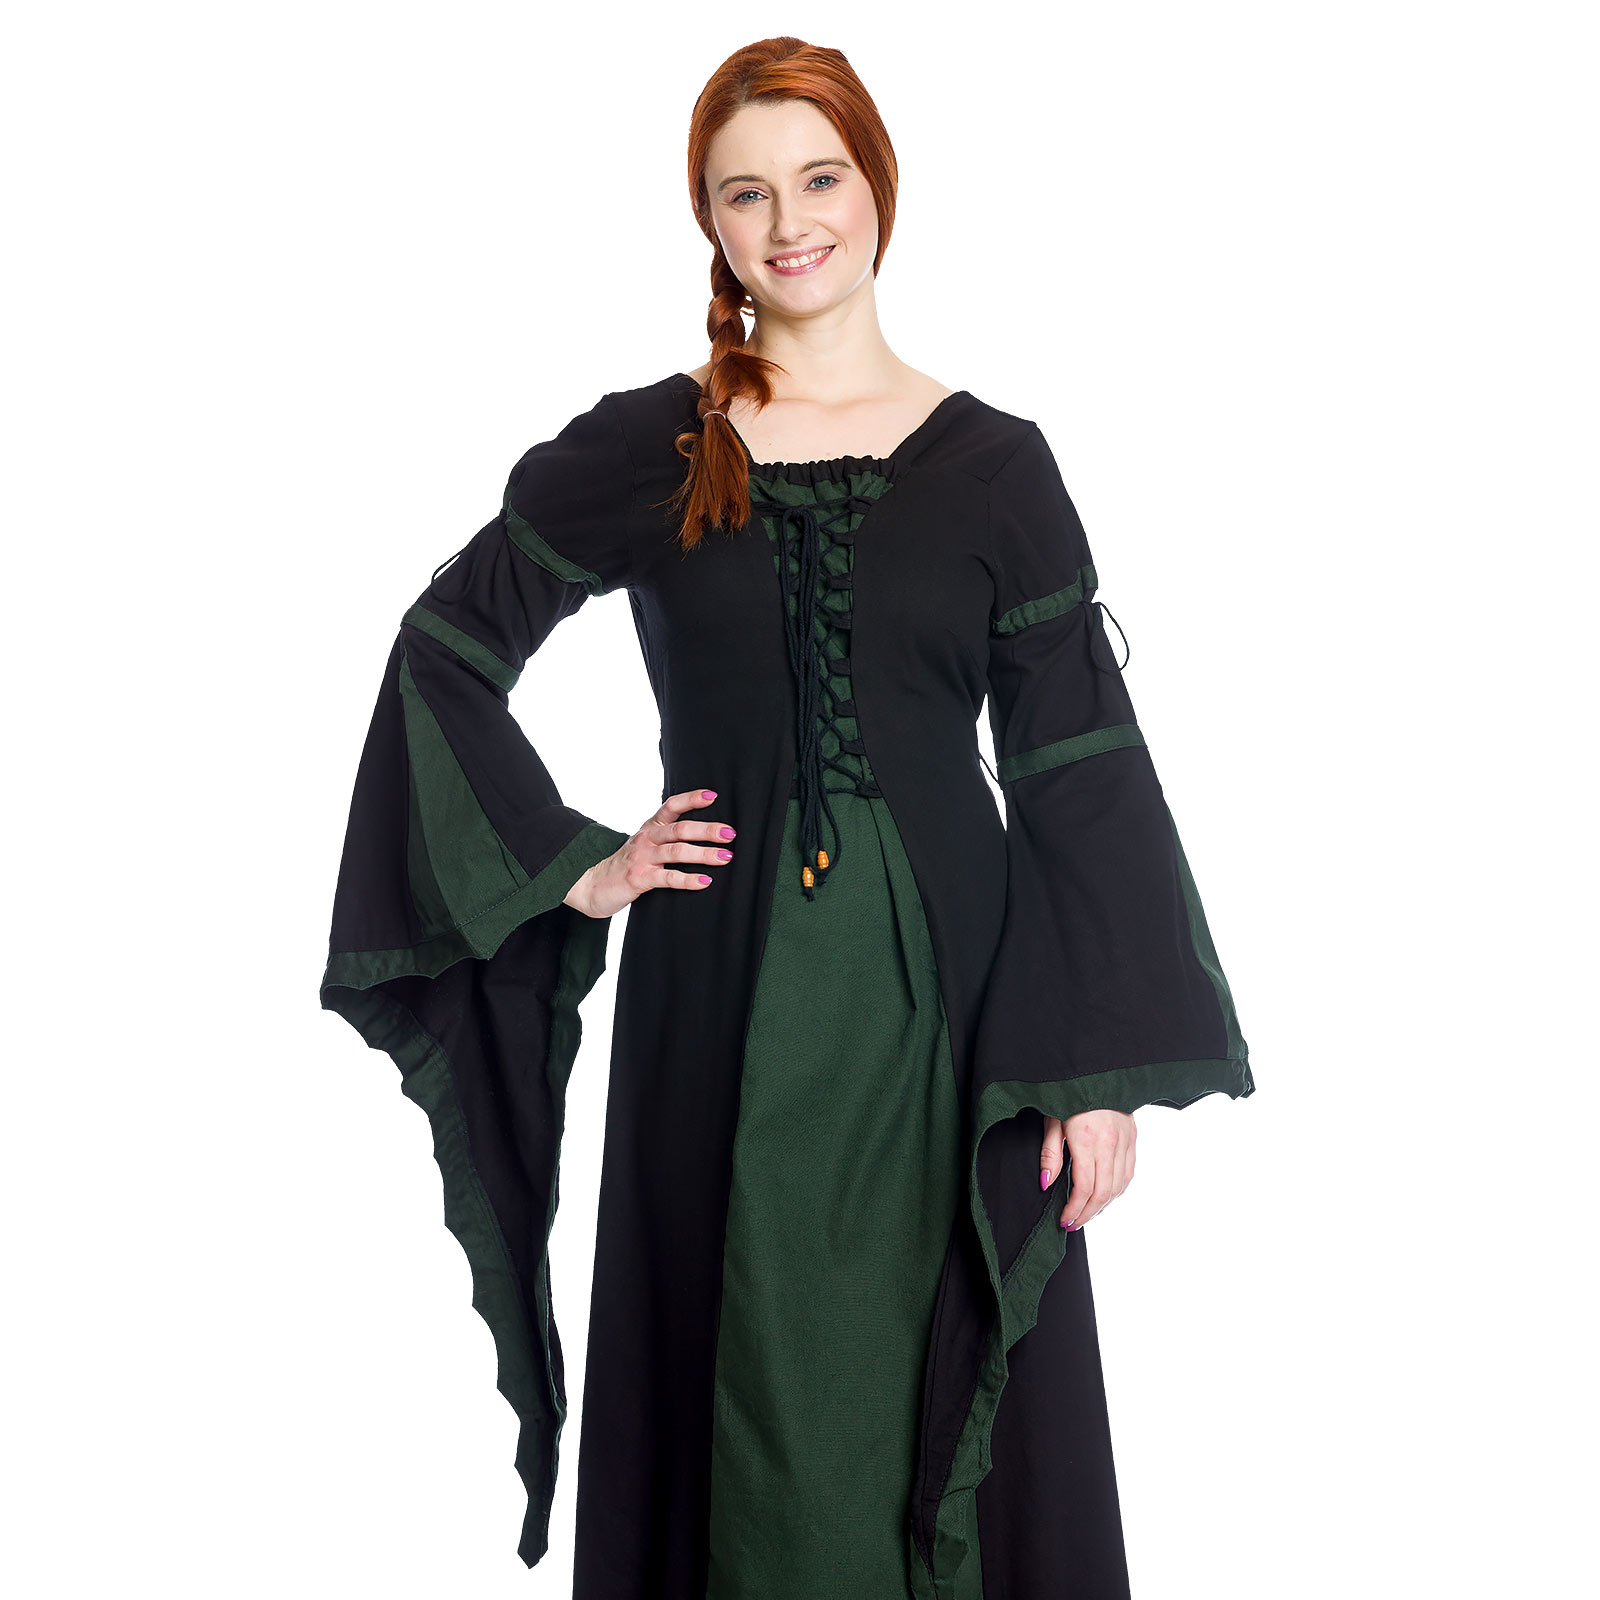 Leona - Mittelalterkleid schwarz-grün